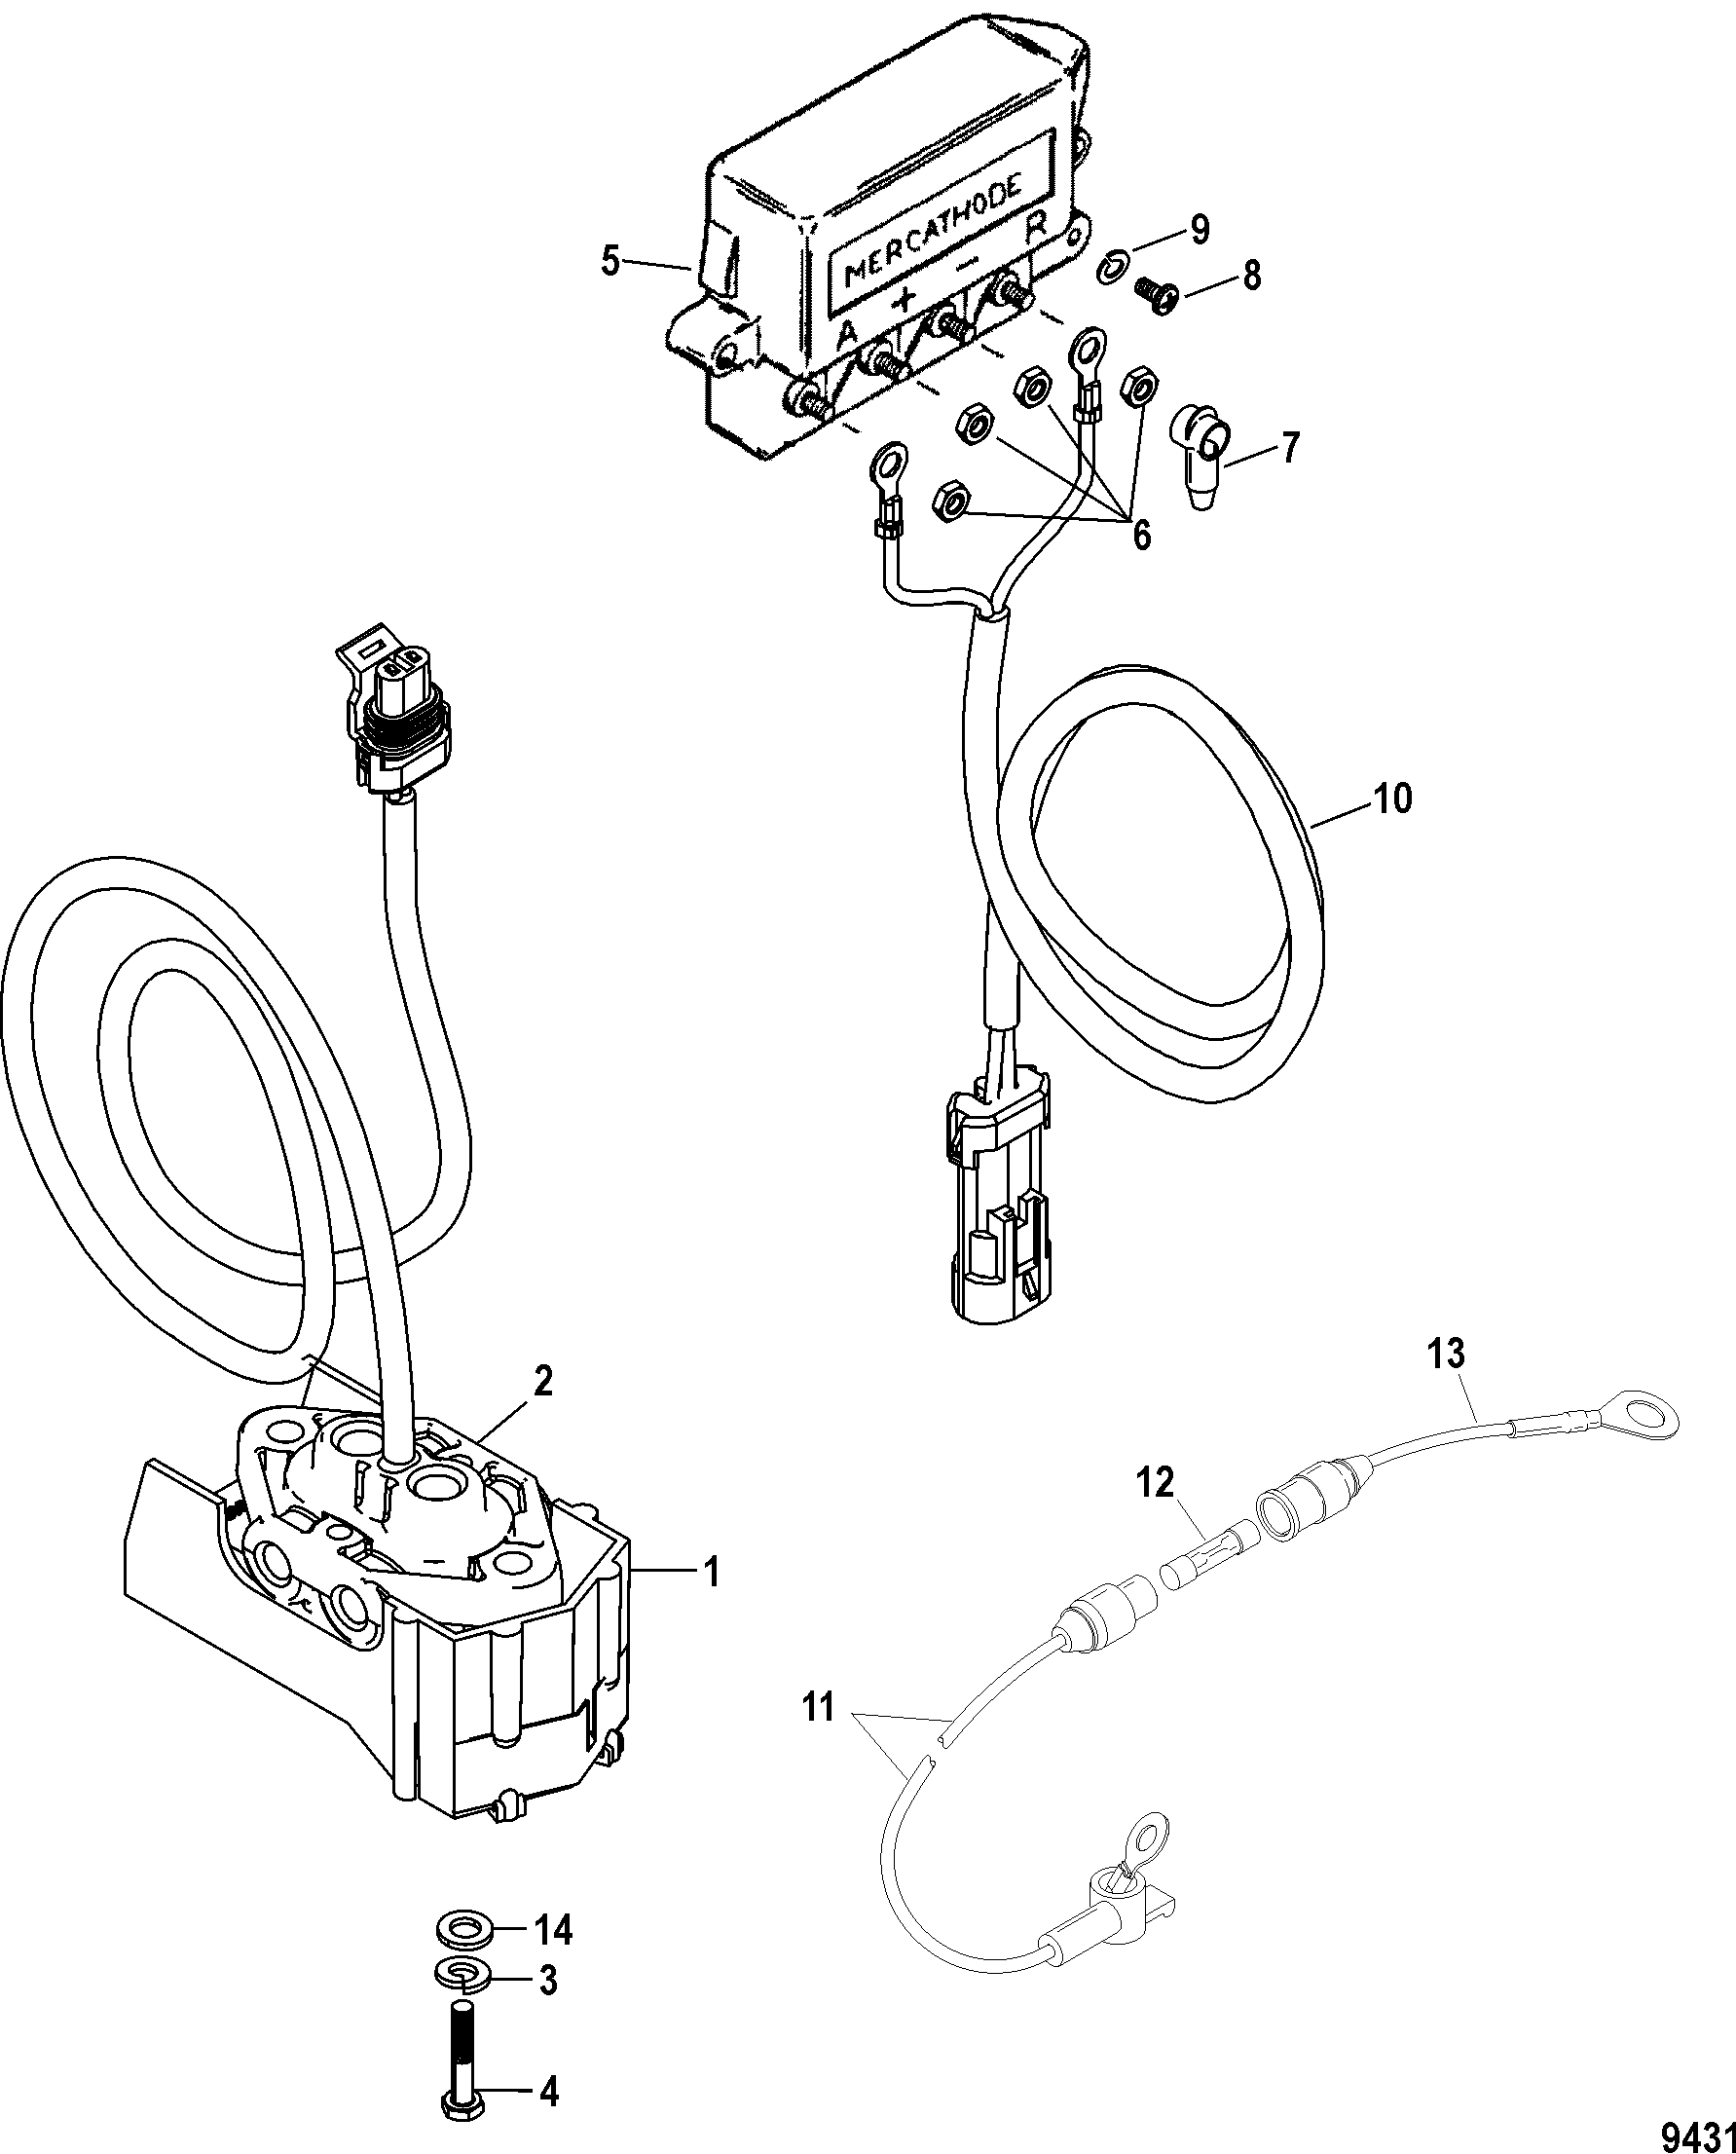 wiring diagram for mercury brunswick corp.16ft jon boat